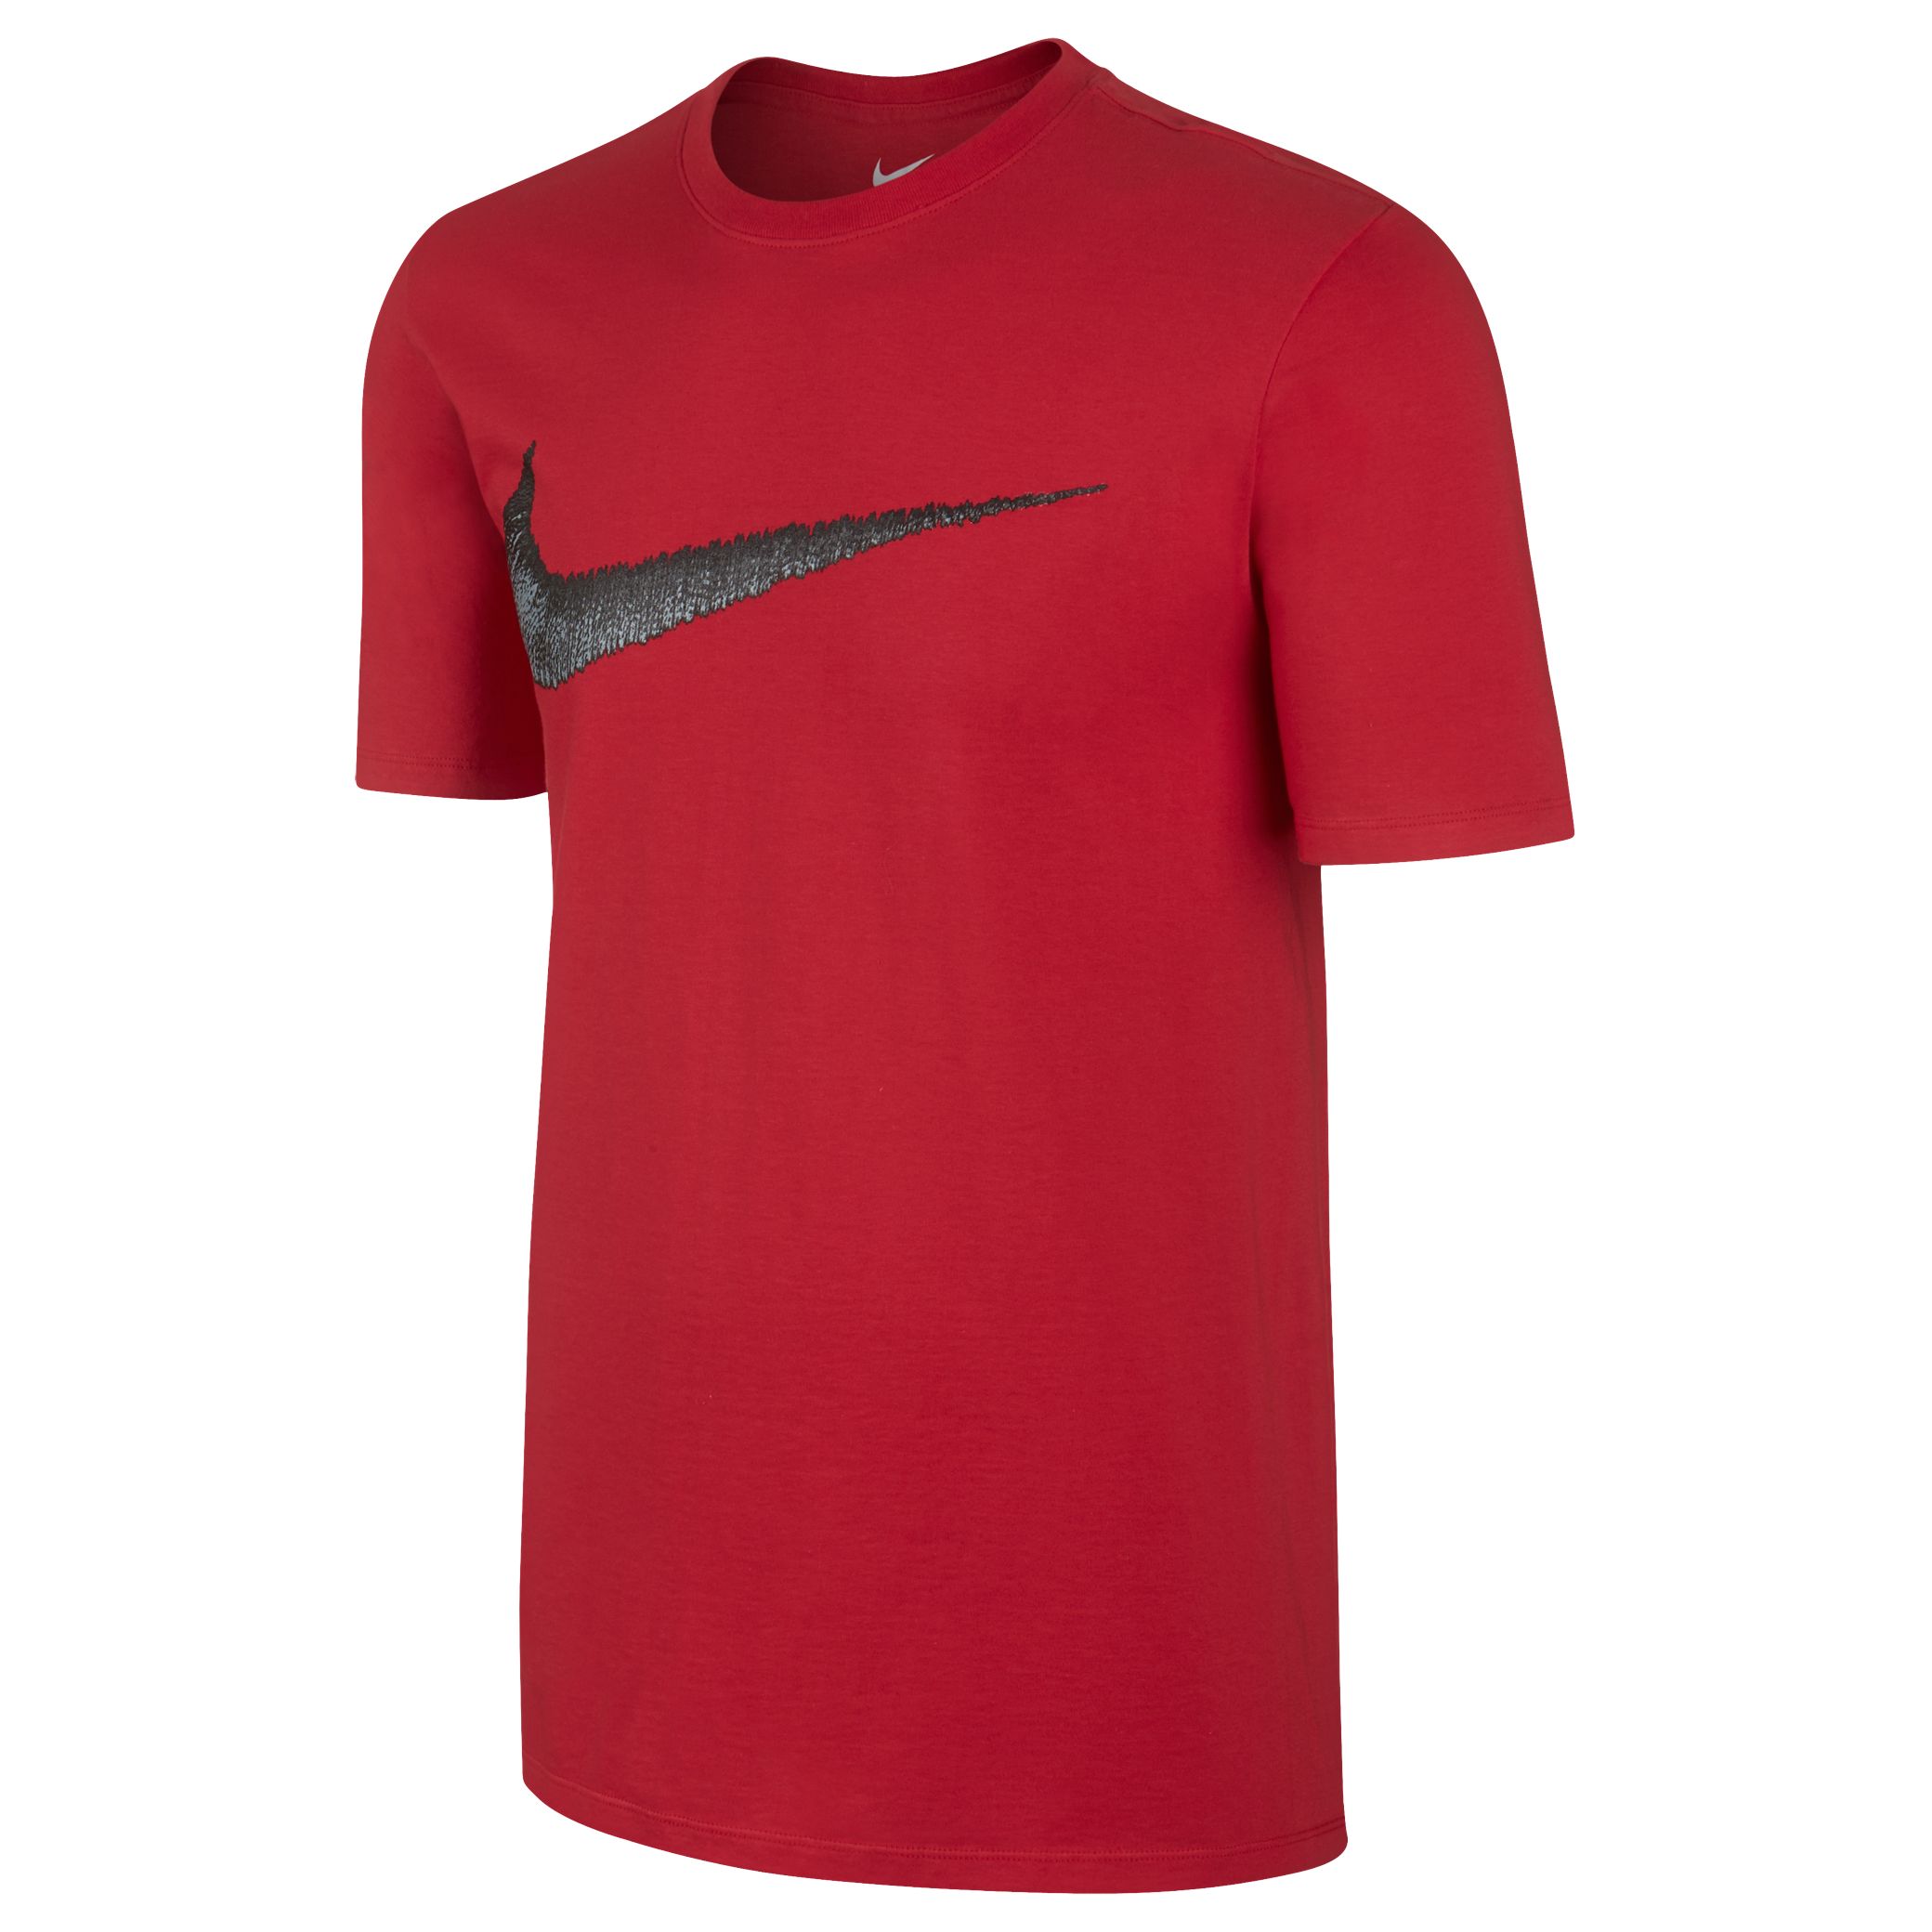 Nike Sportswear Swoosh Cotton T-Shirt, Red/Black, S